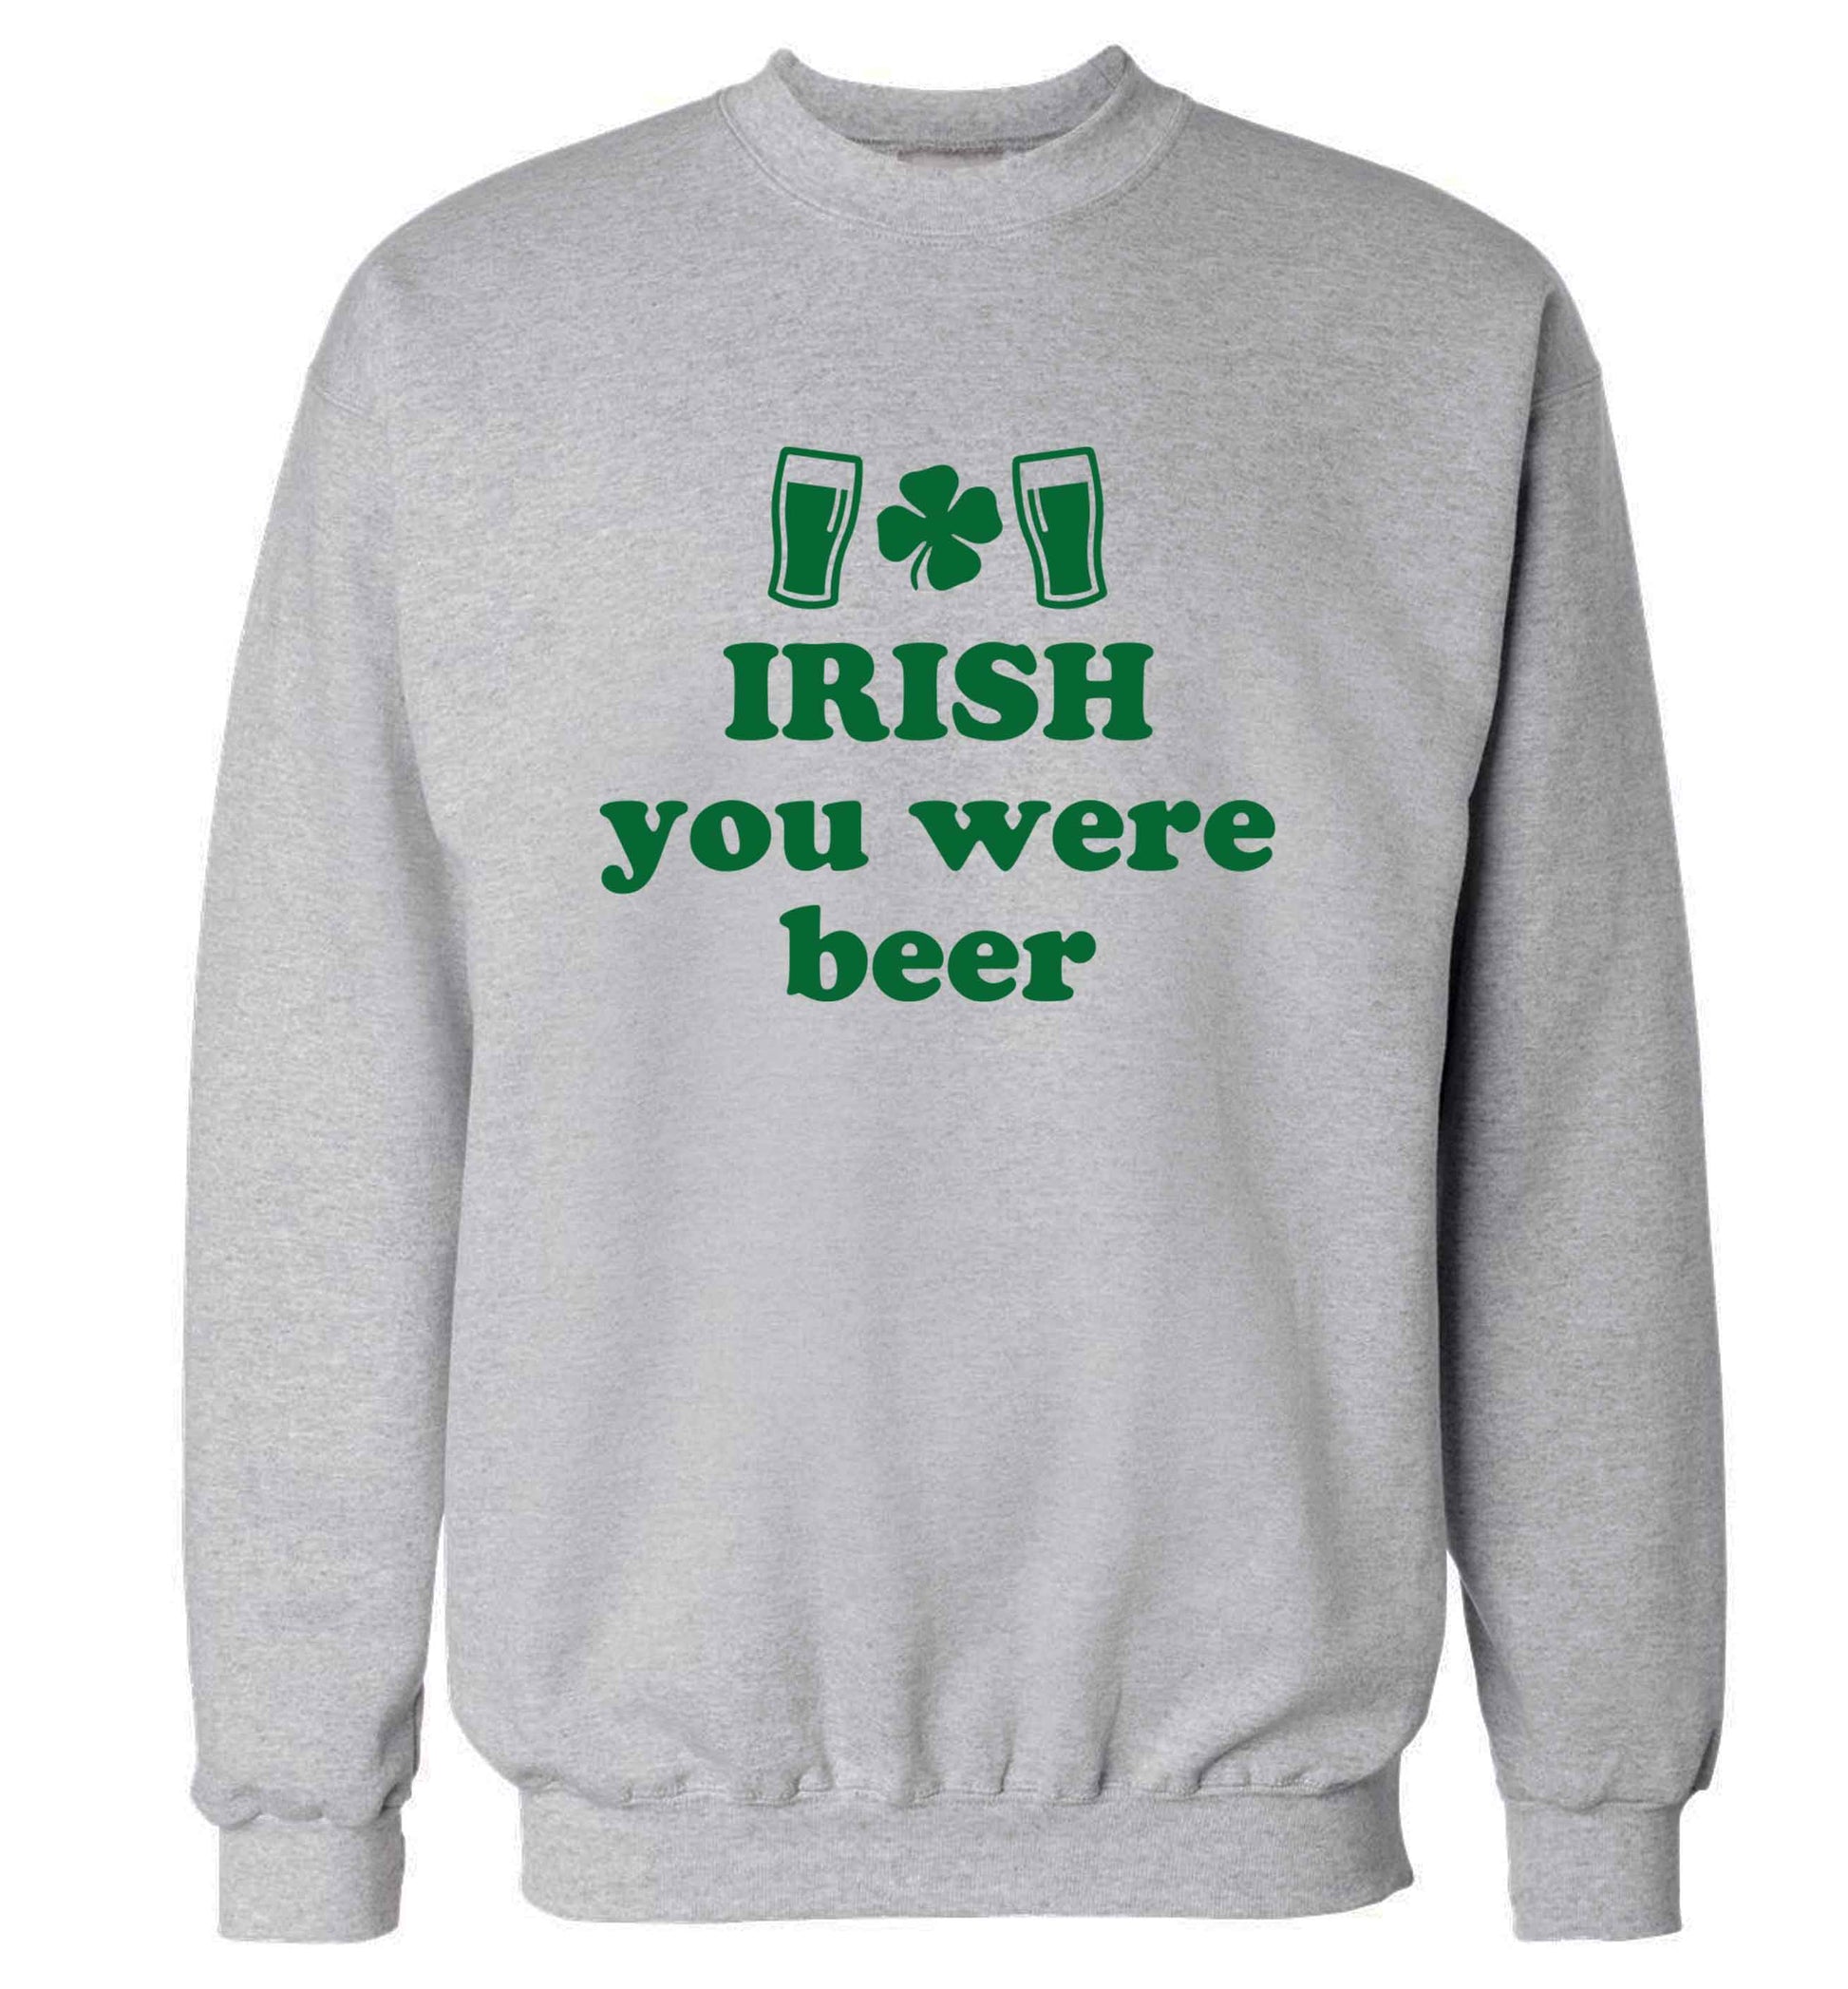 Irish you were beer adult's unisex grey sweater 2XL